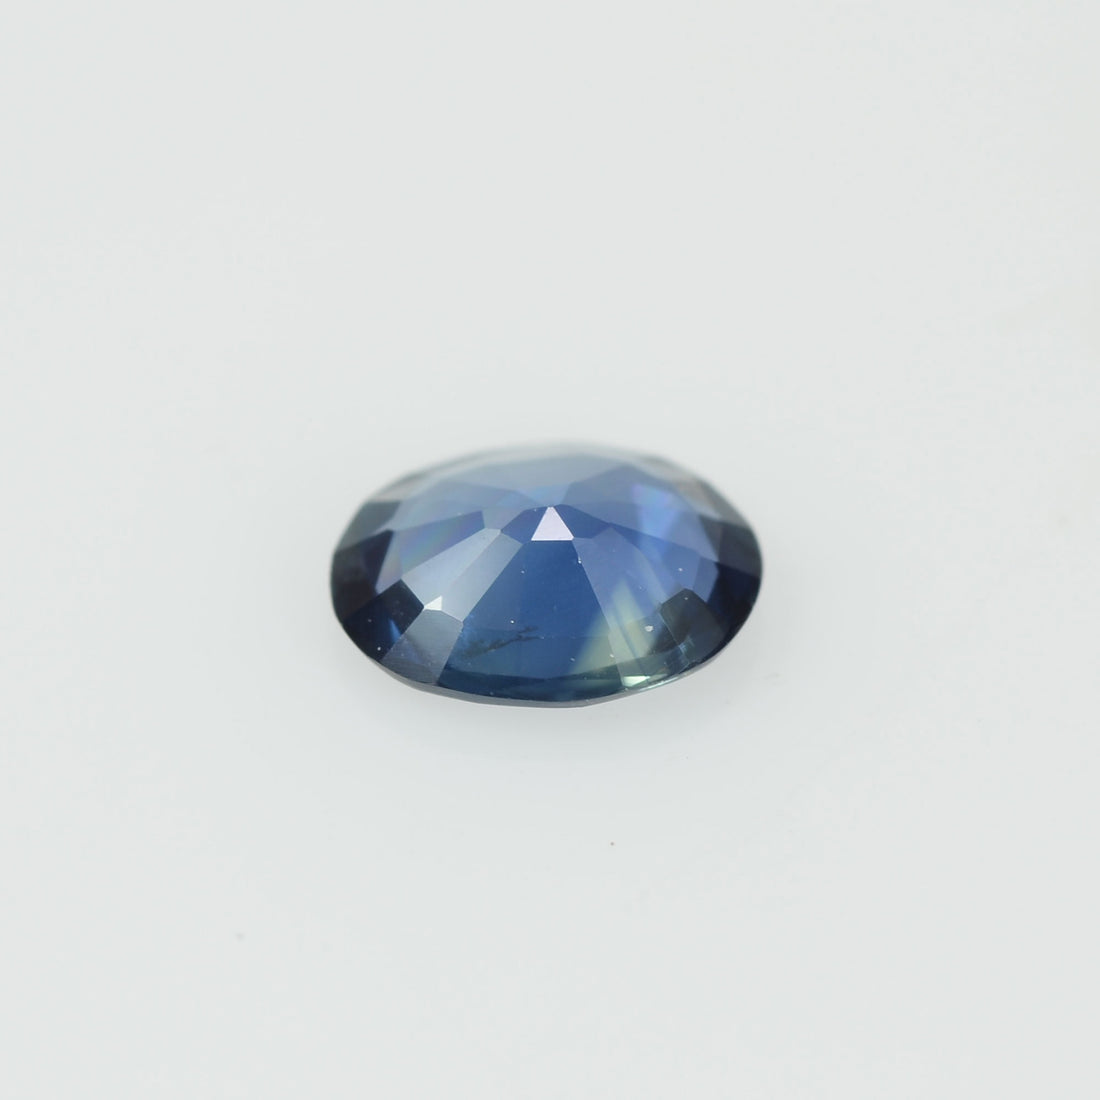 0.29 cts Natural Blue Sapphire Loose Gemstone Oval Cut - Thai Gems Export Ltd.